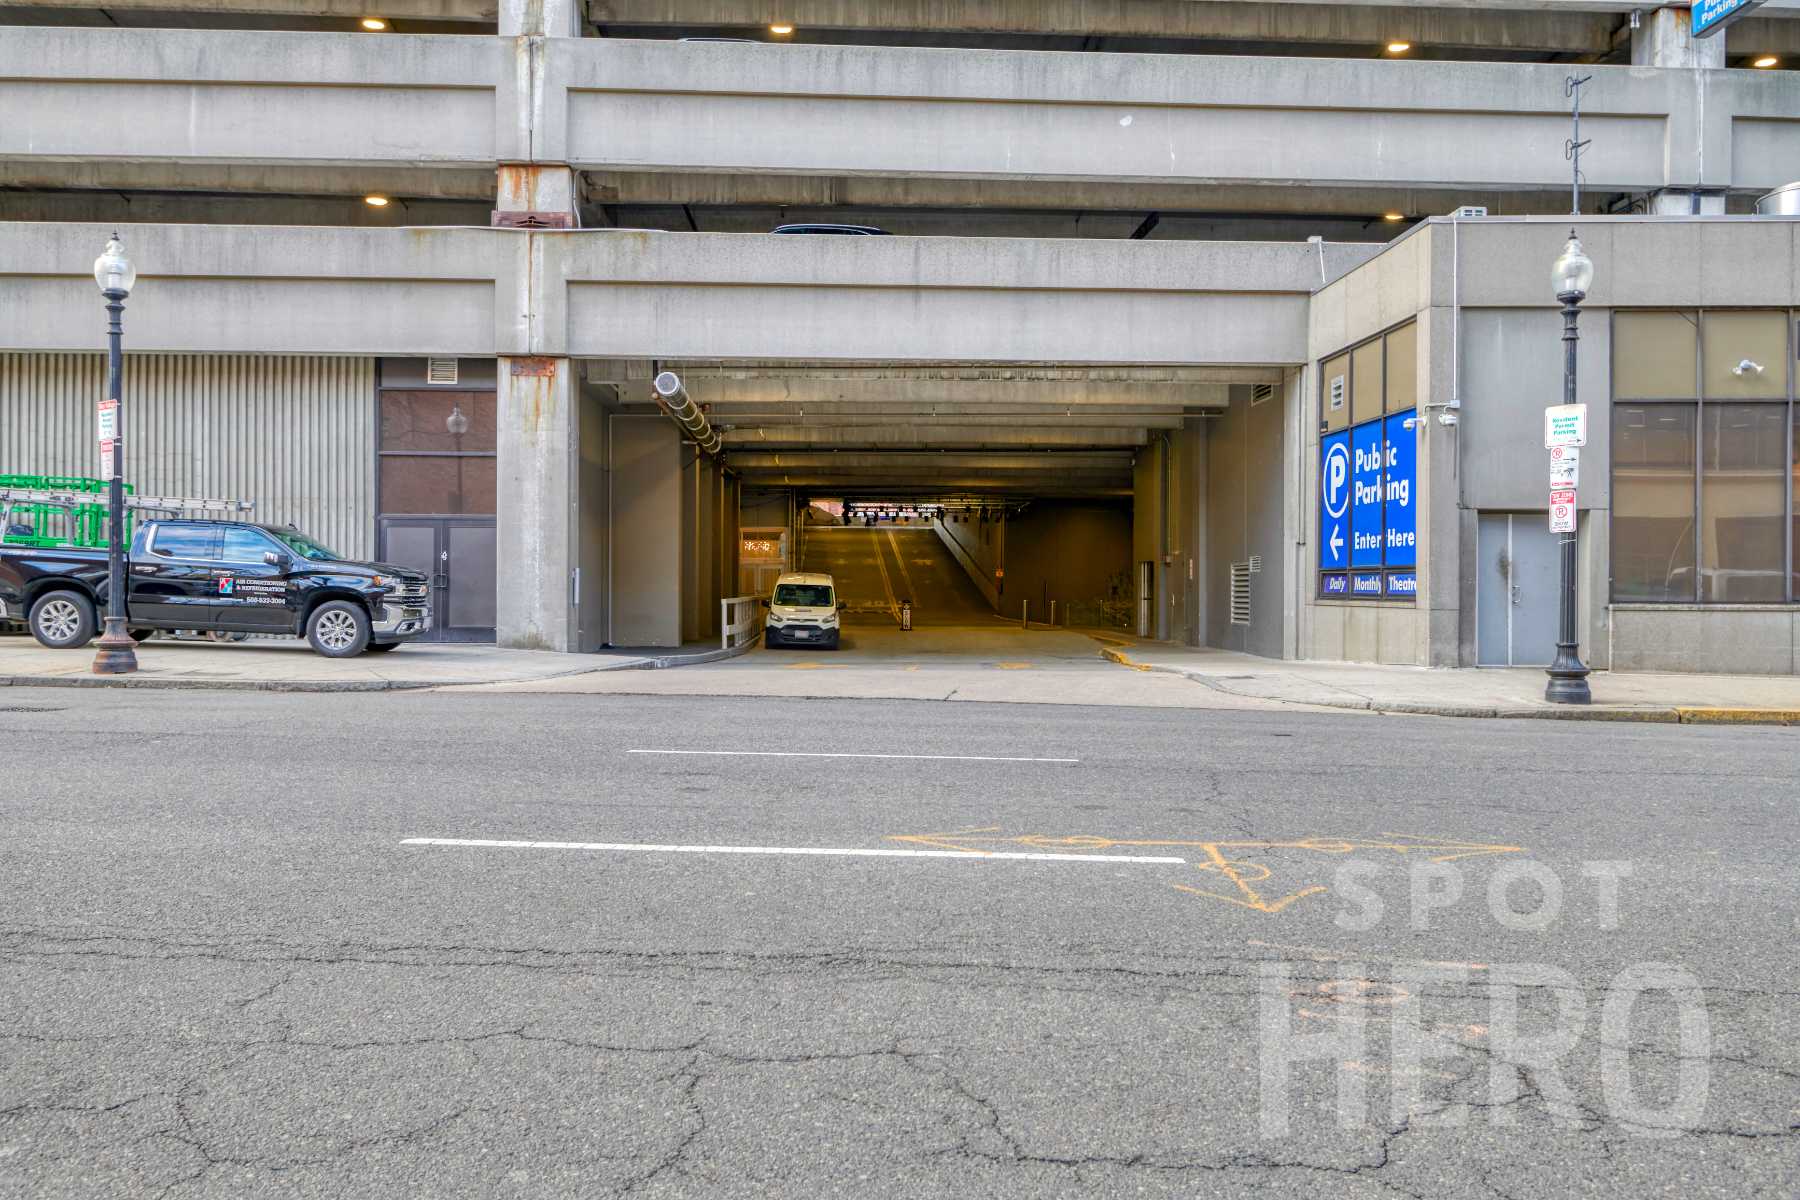 PARKPLUS Continues Penetration of Boston Automated Parking Market – PARKPLUS